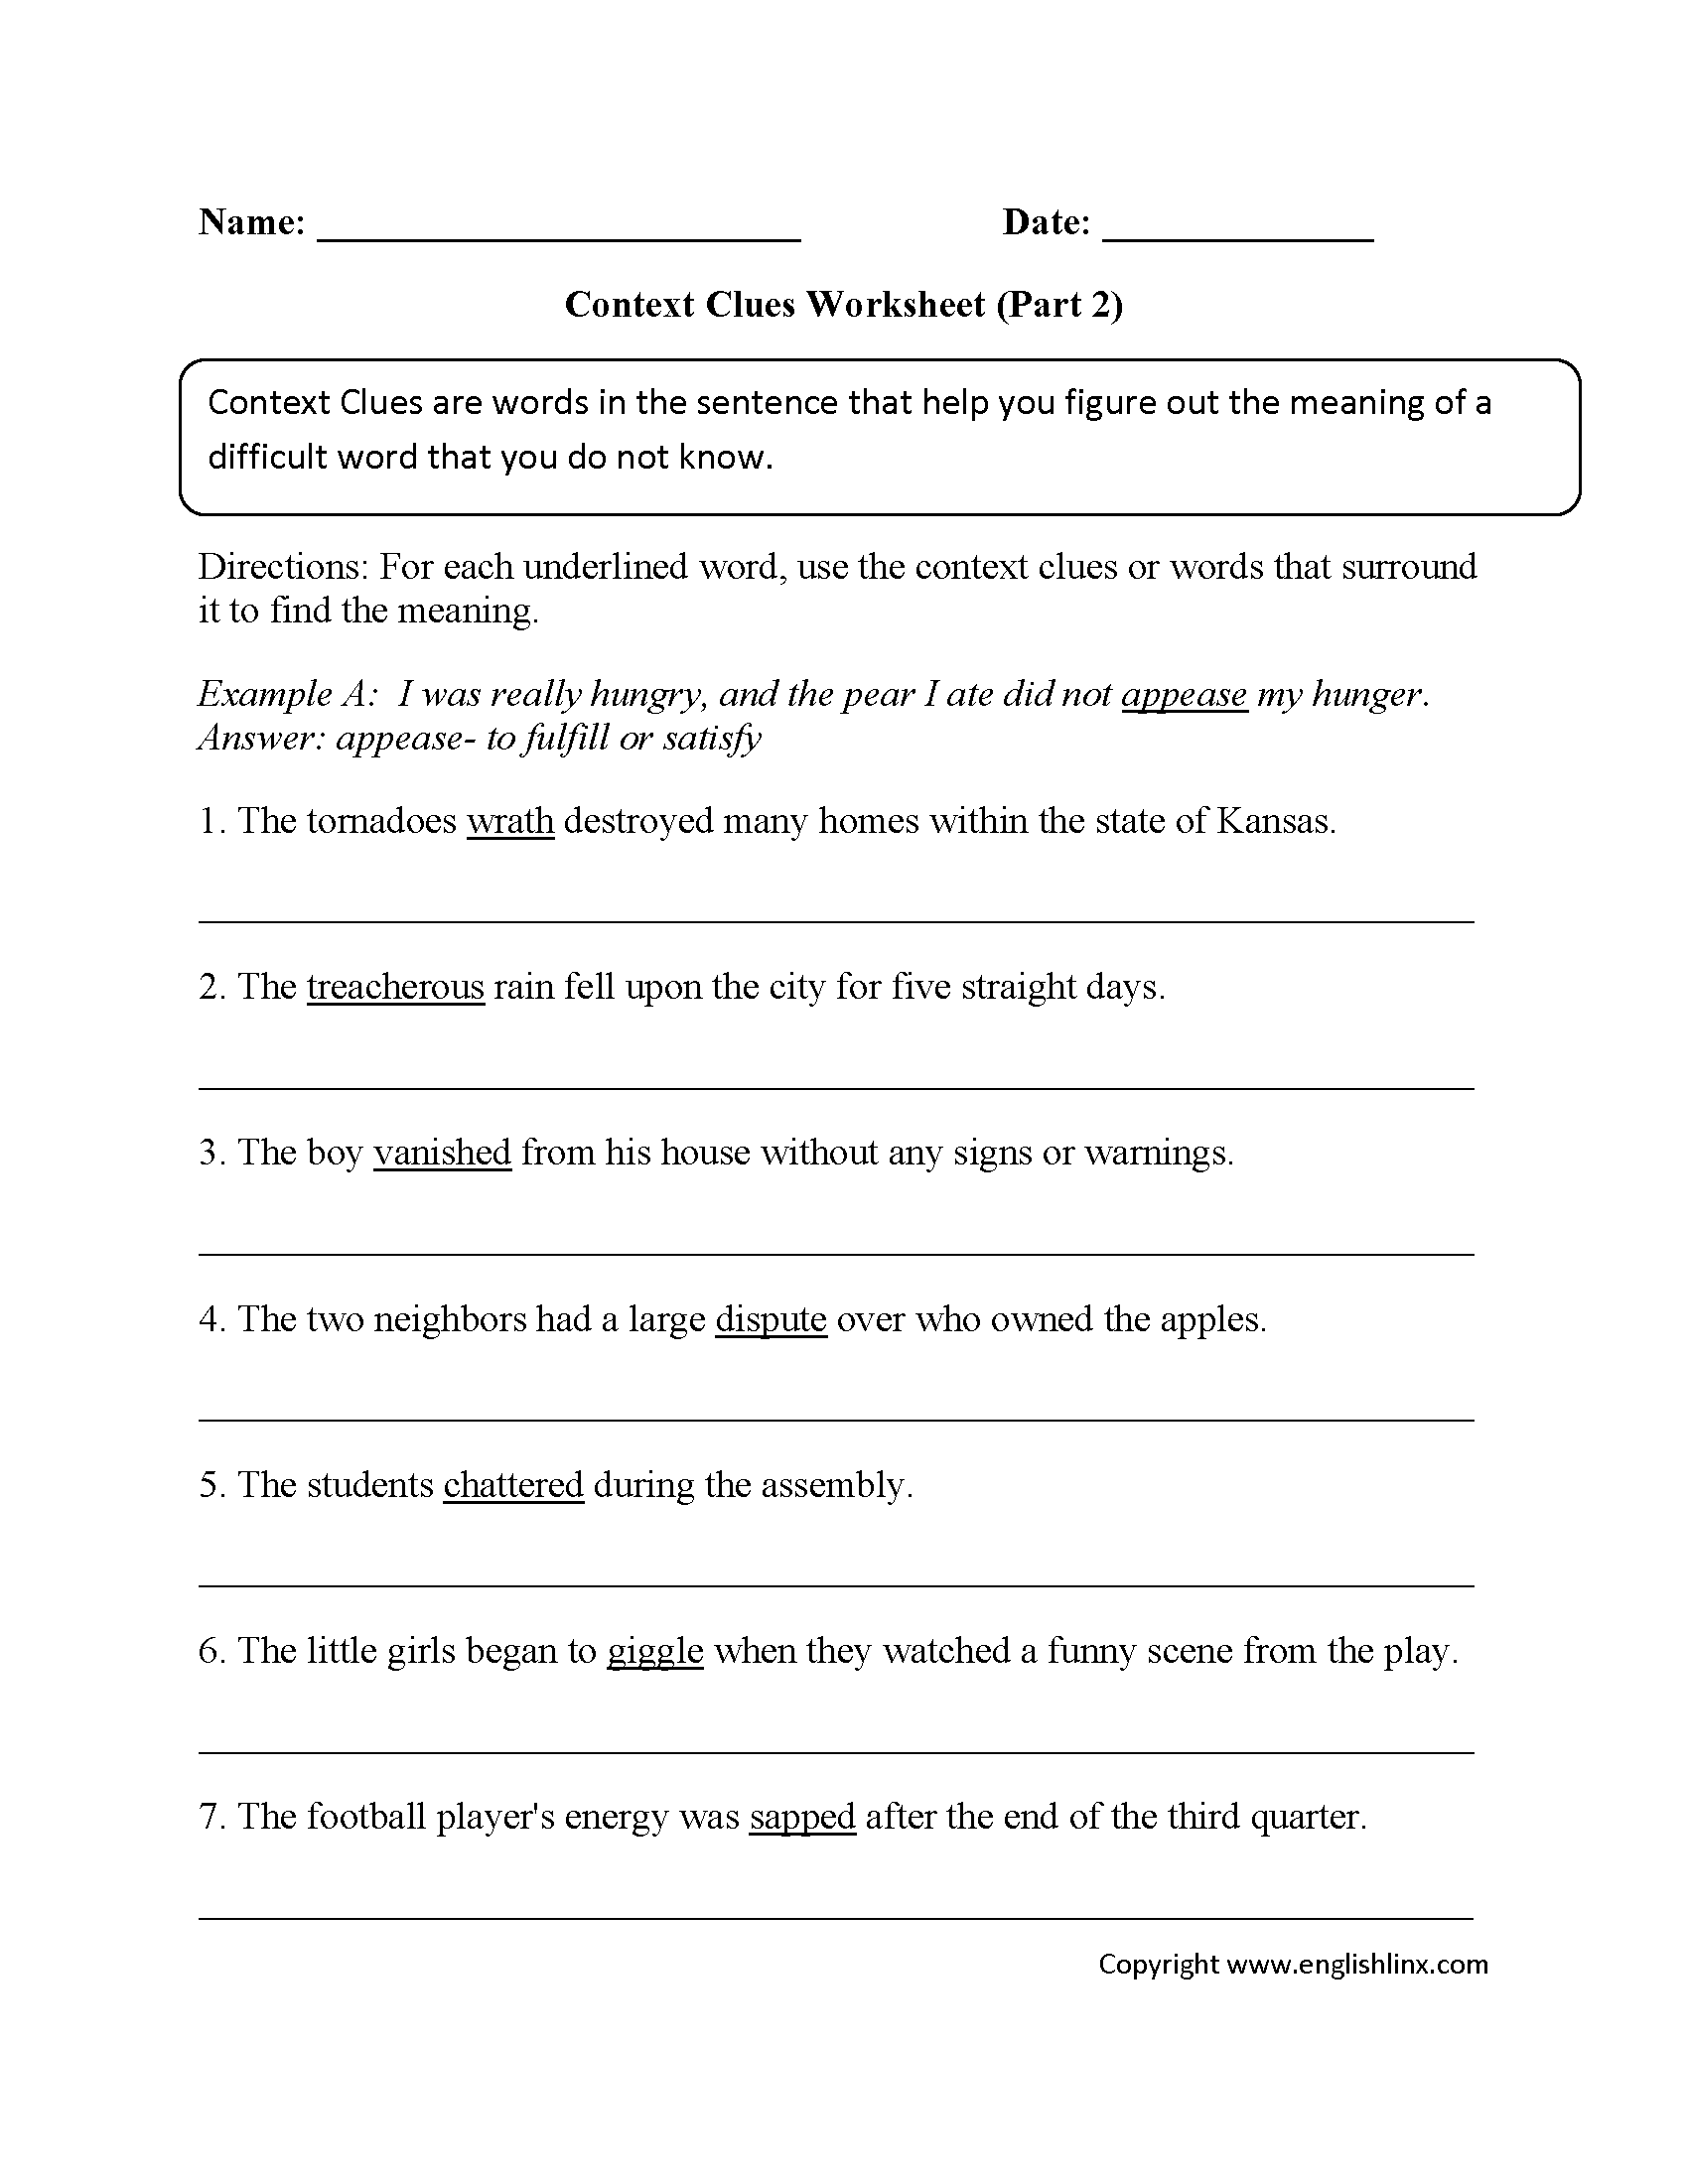 Context Clues Worksheet Writing Part 2 Intermediate